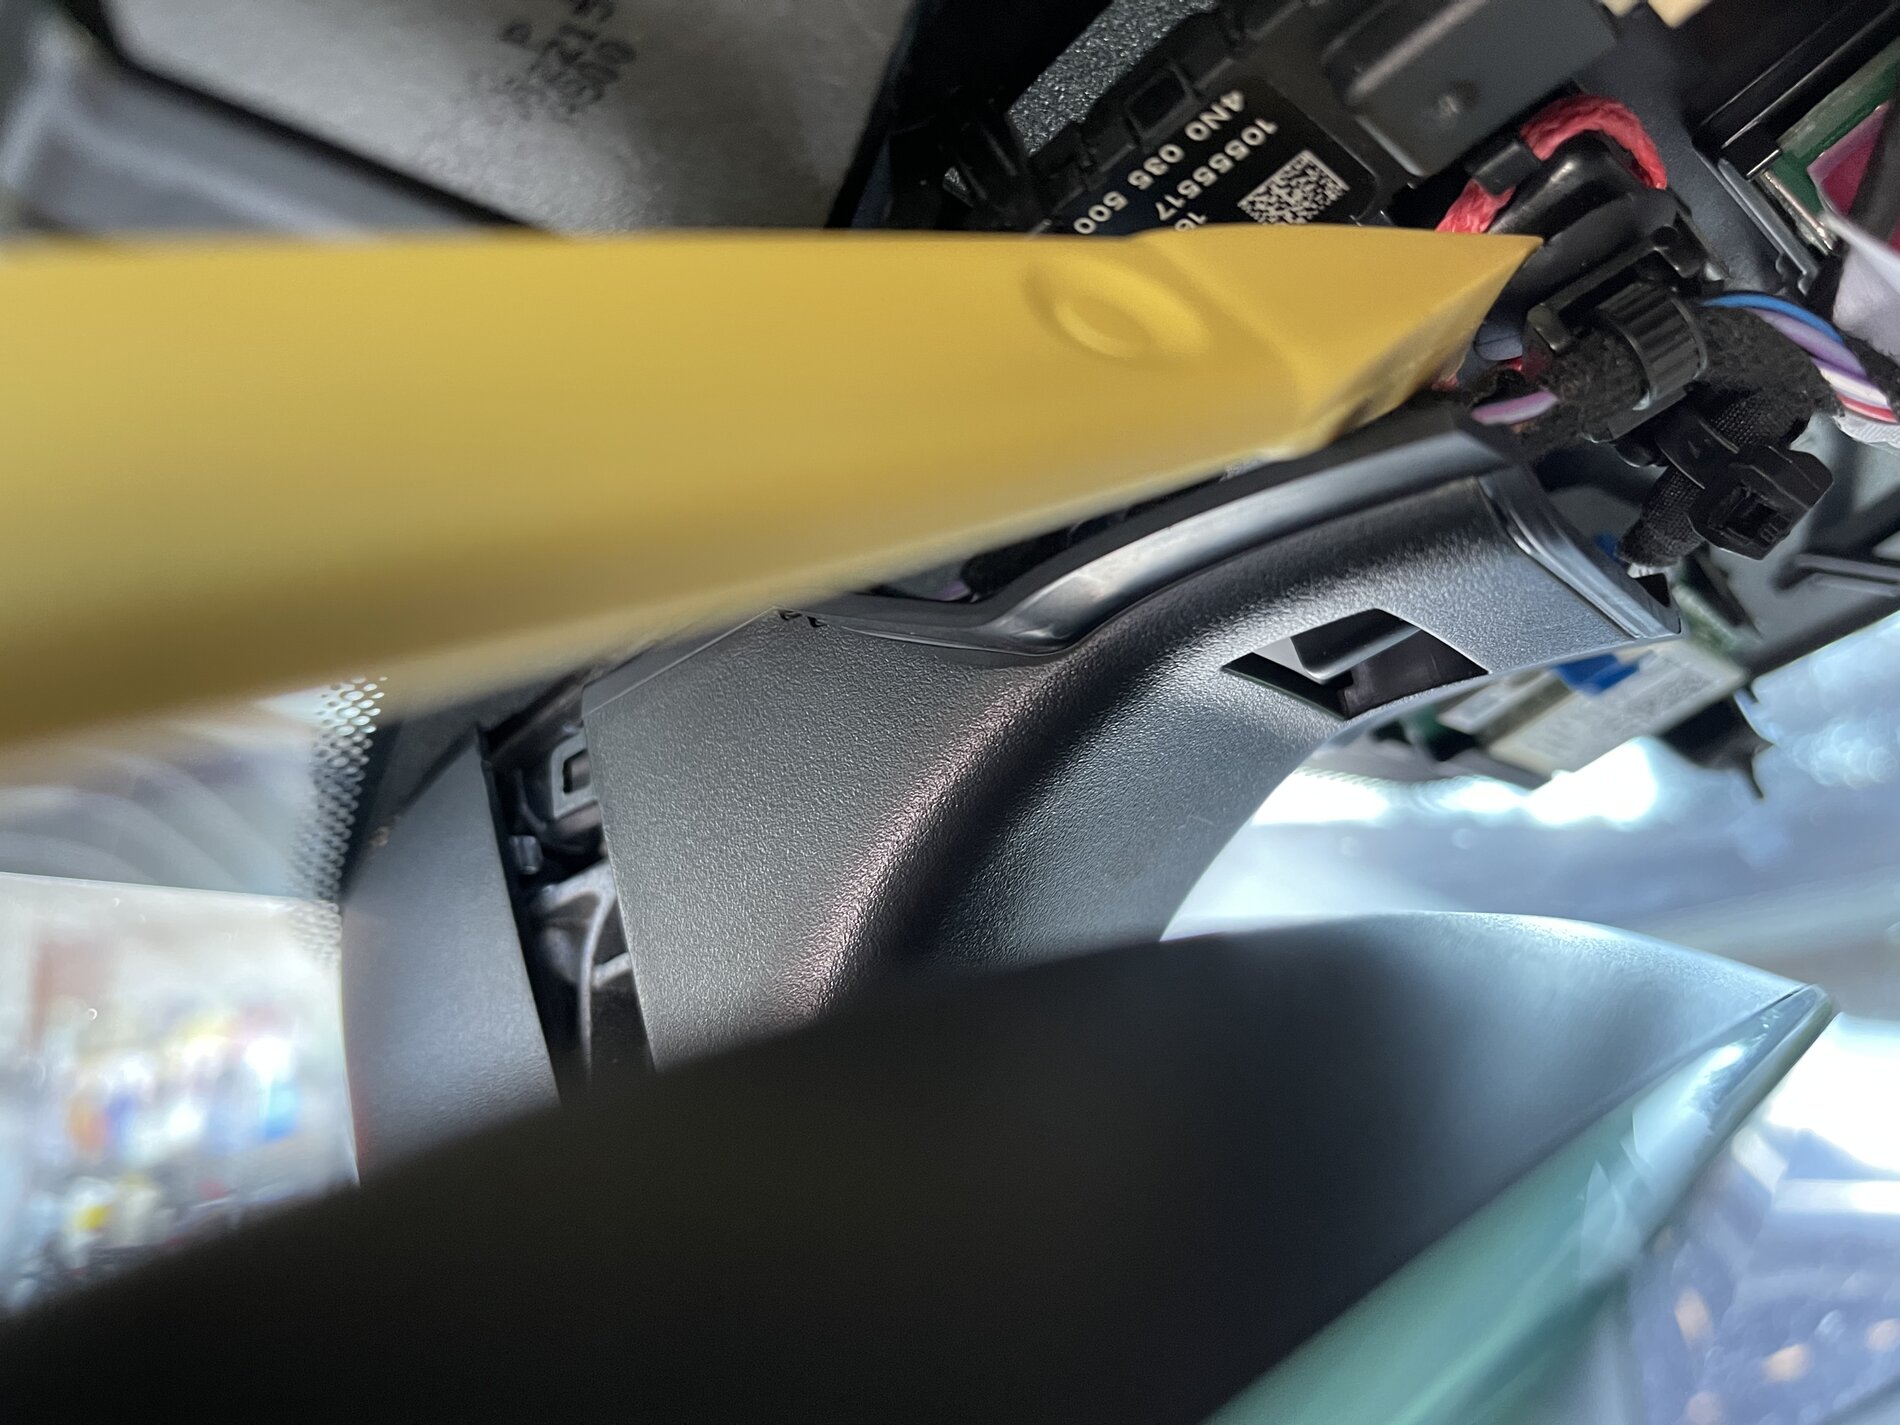 Porsche Taycan MirrorTap / Blendmount install for Uniden R7, with pics! 65F01B5A-44B2-4473-BCA7-DB25E46E0E5A